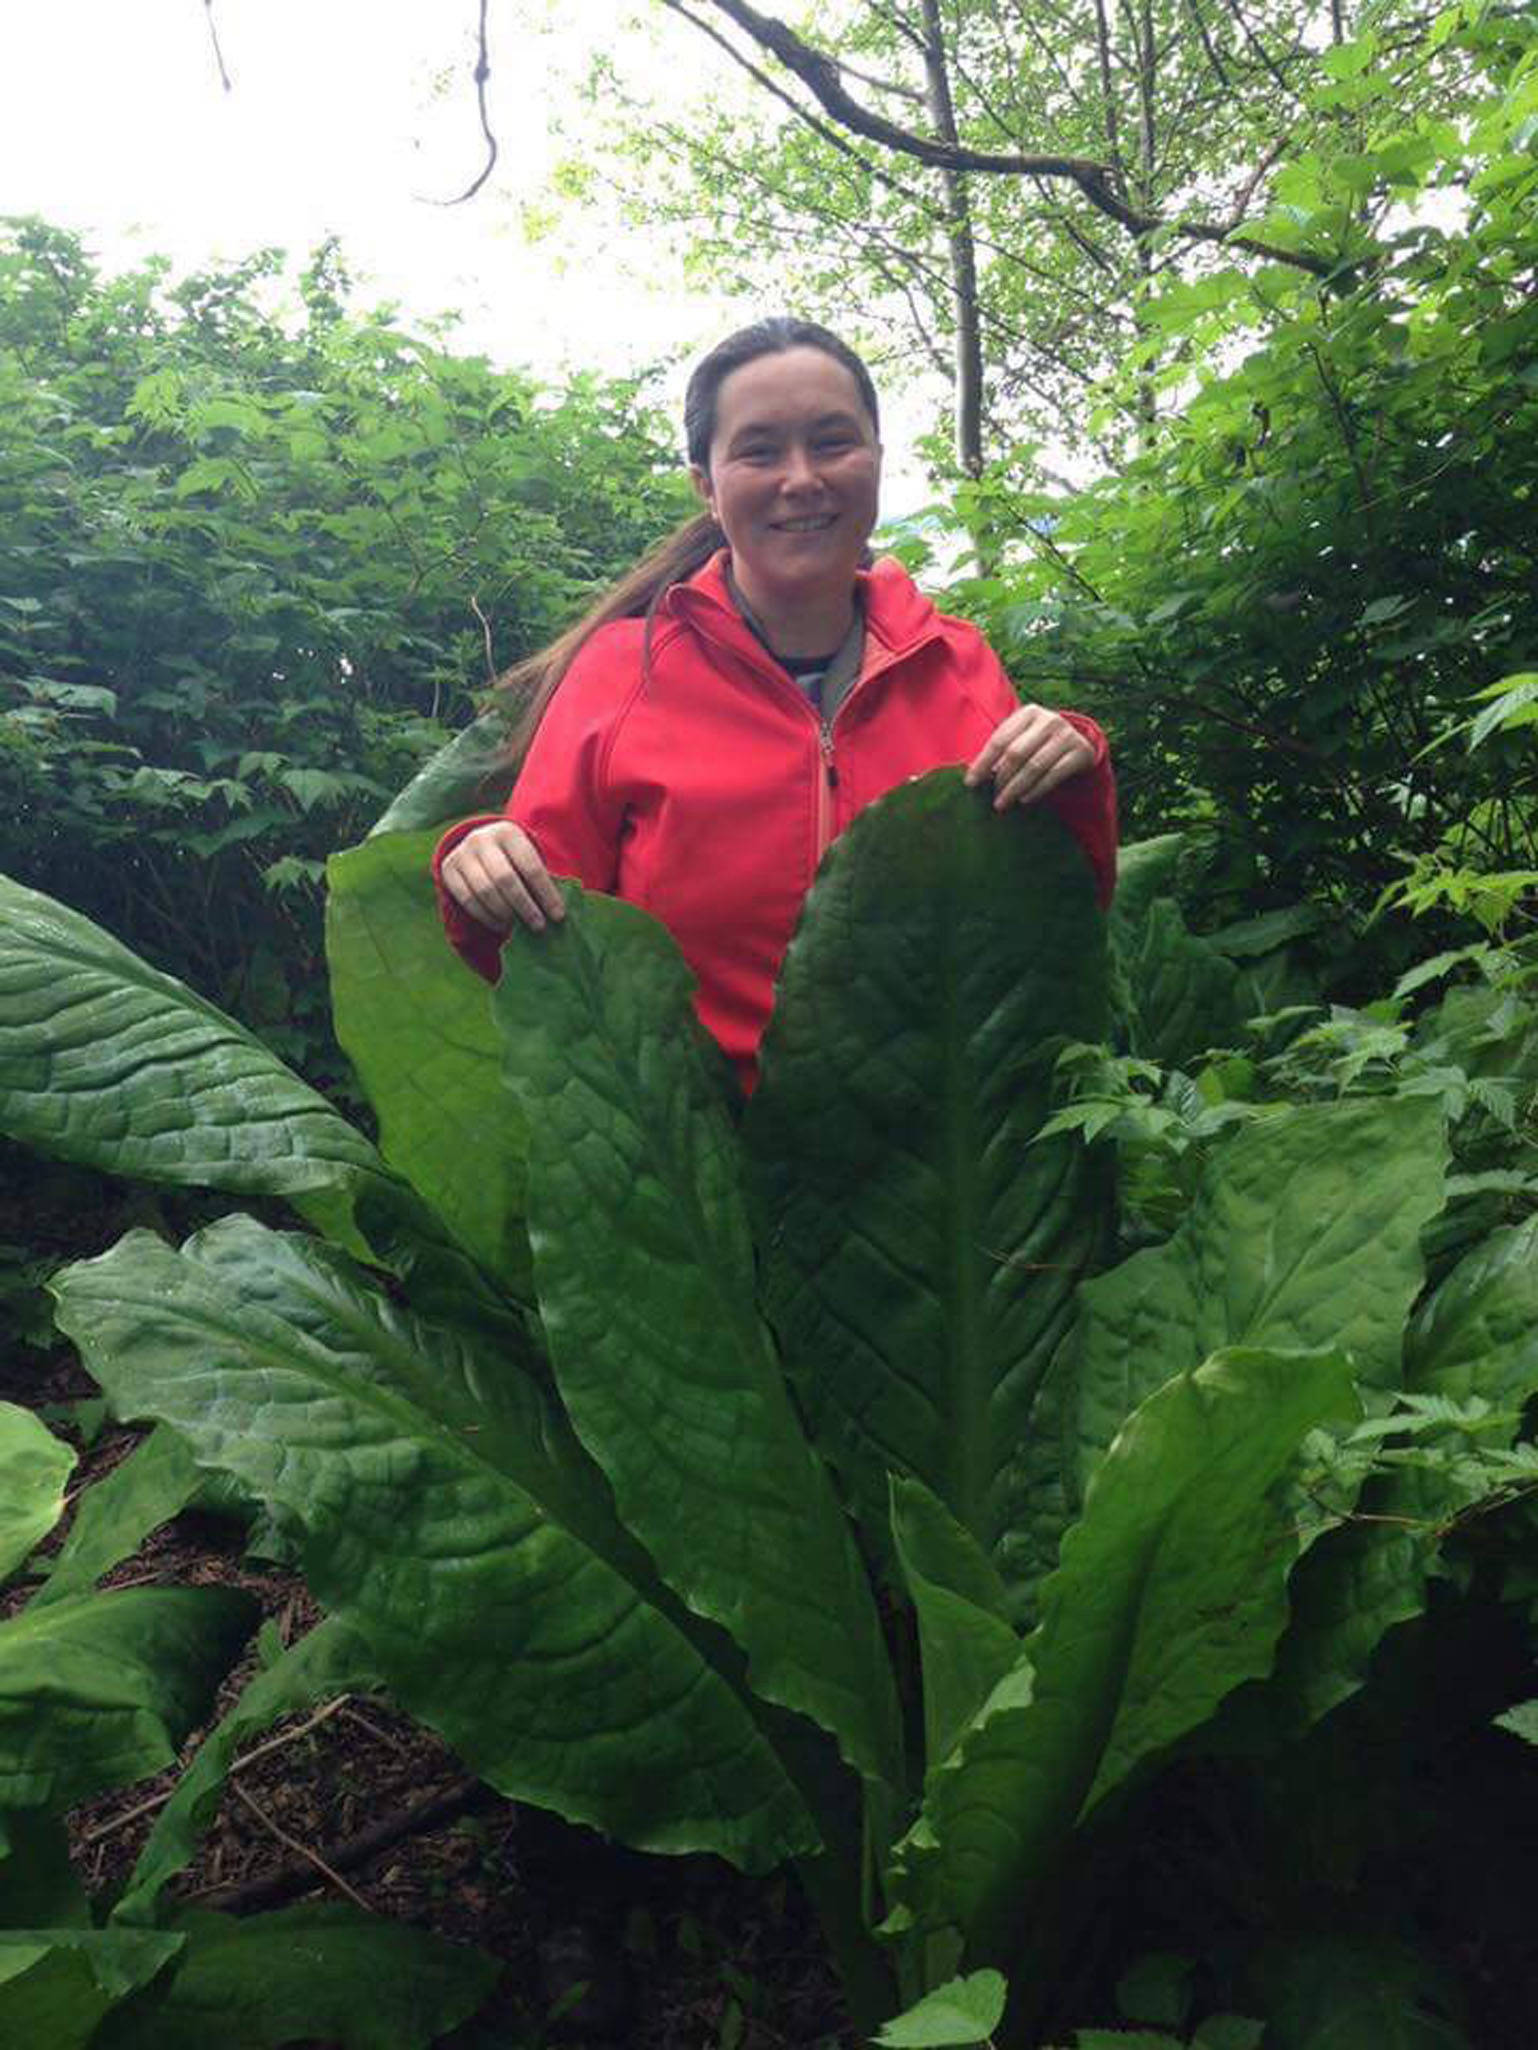 Vivian Mork, Vivian Prescott’s daughter and co-writer of Planet Alaska, stands by skunk cabbage leaves. Image courtesy of Vivian Faith Prescott.